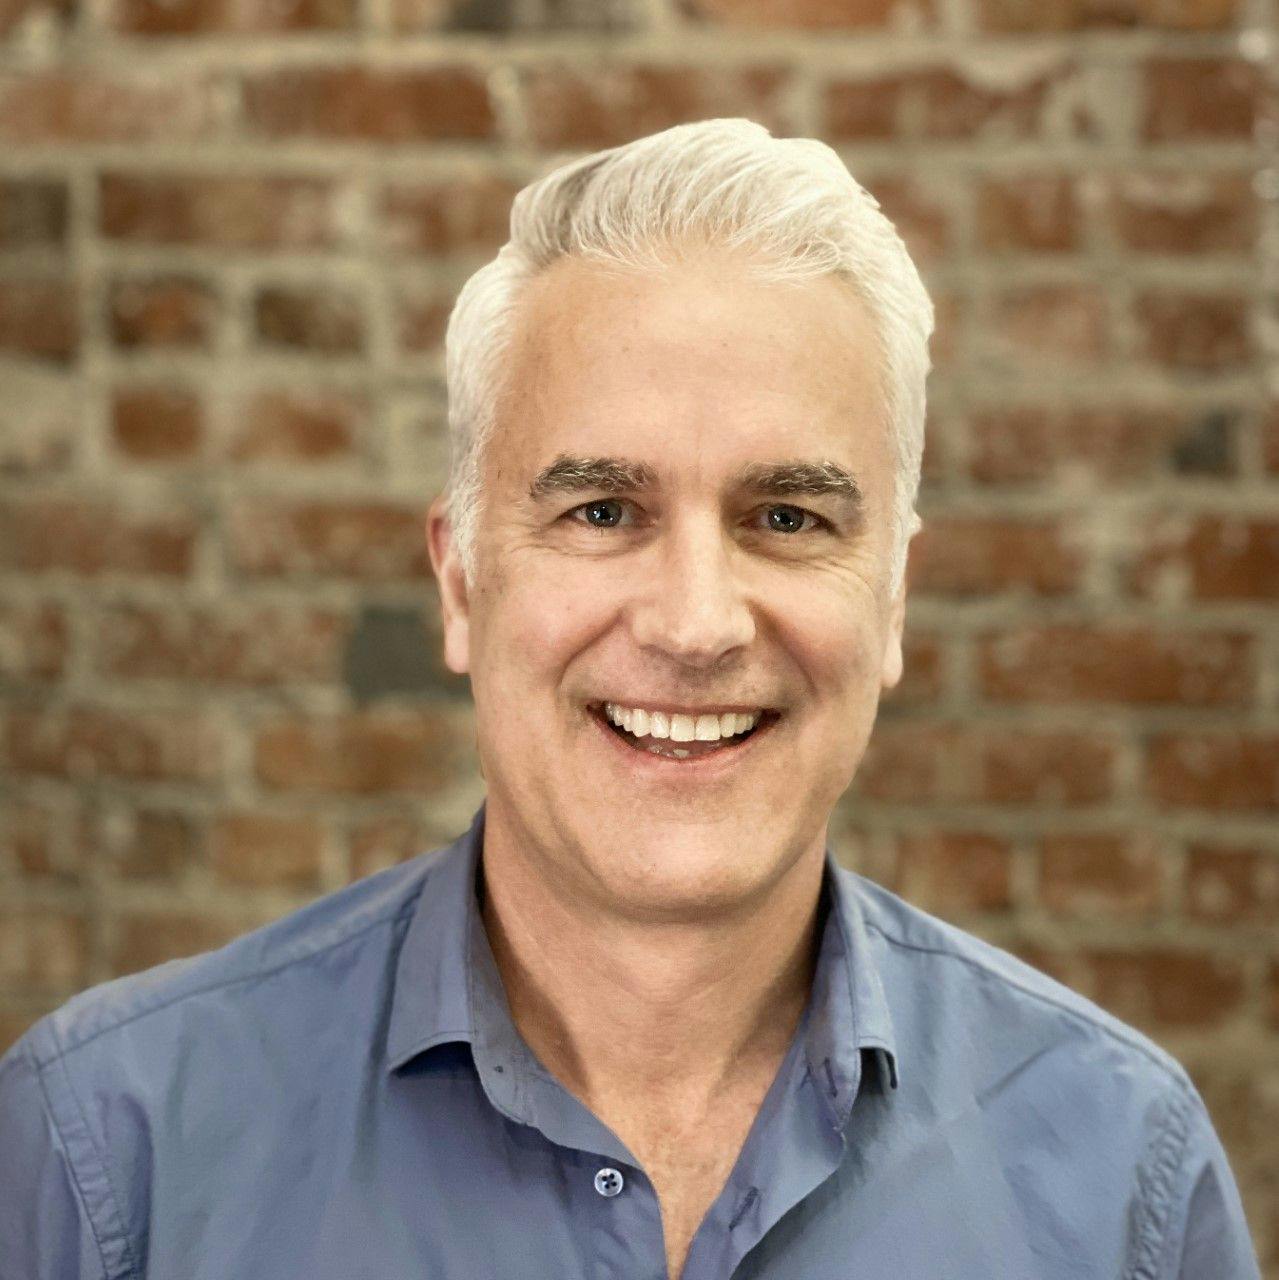 Greg Johnsen, CEO of Lifelink Systems